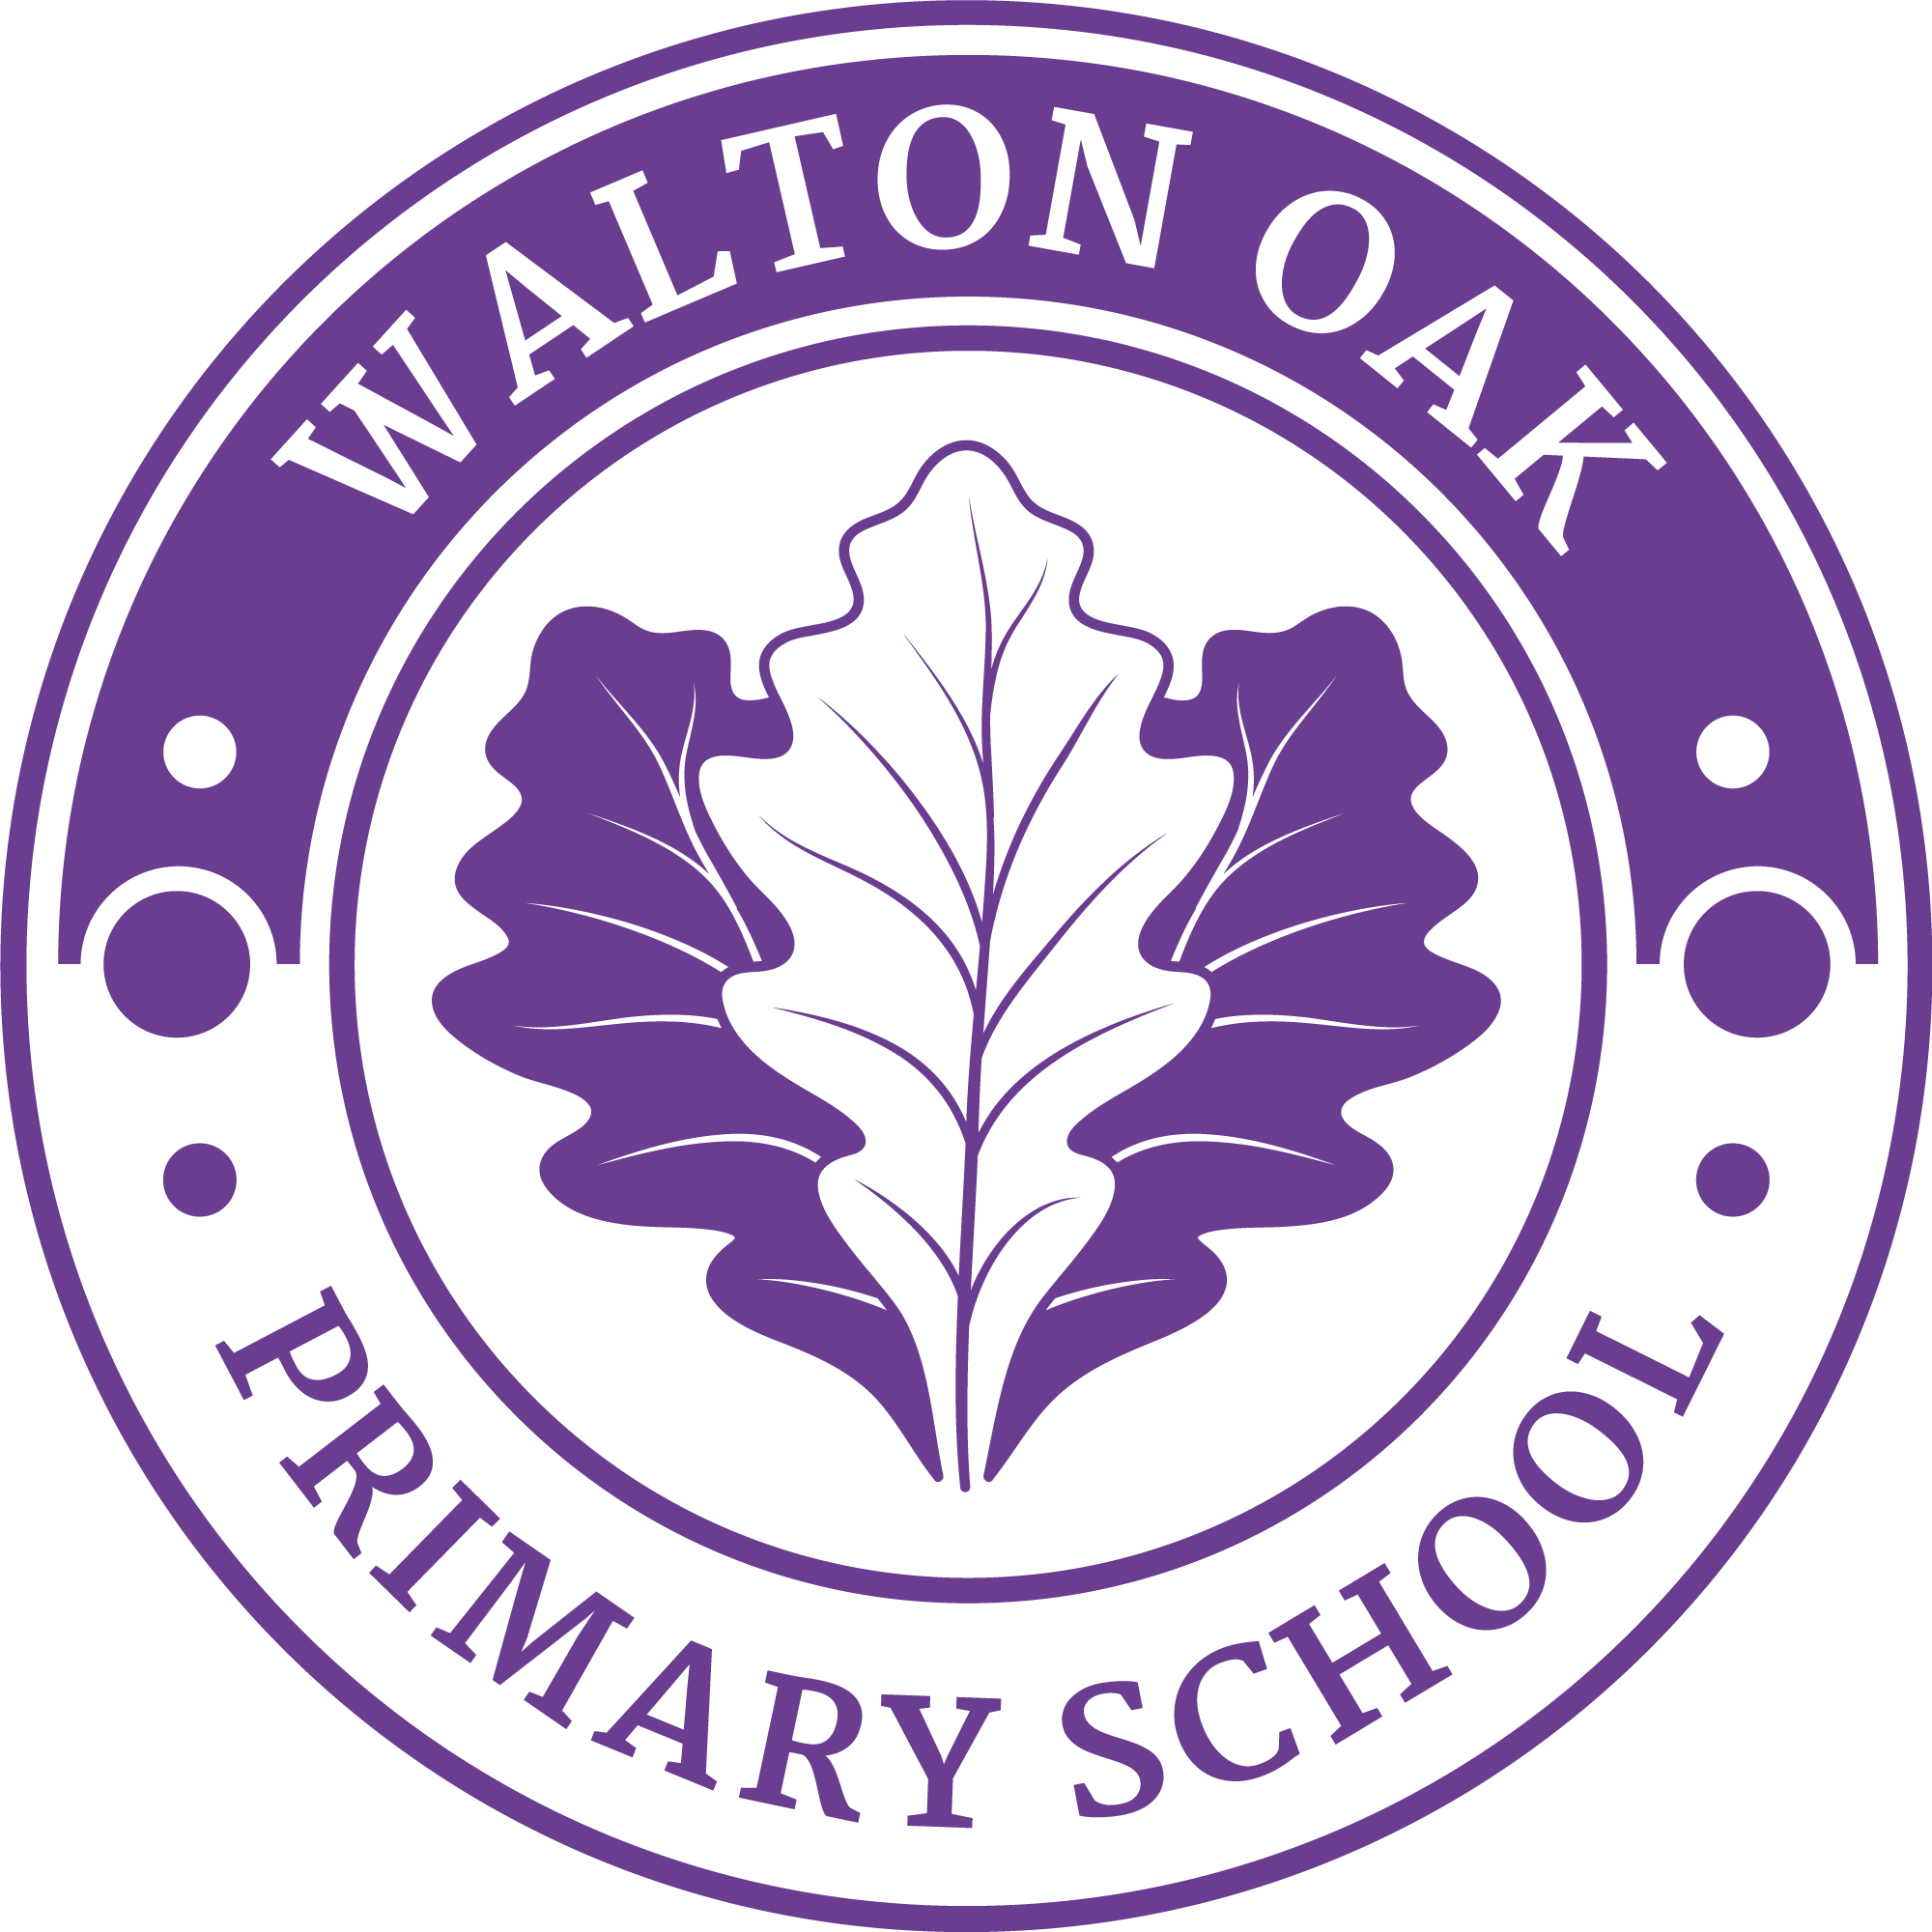 Walton Oak Primary School